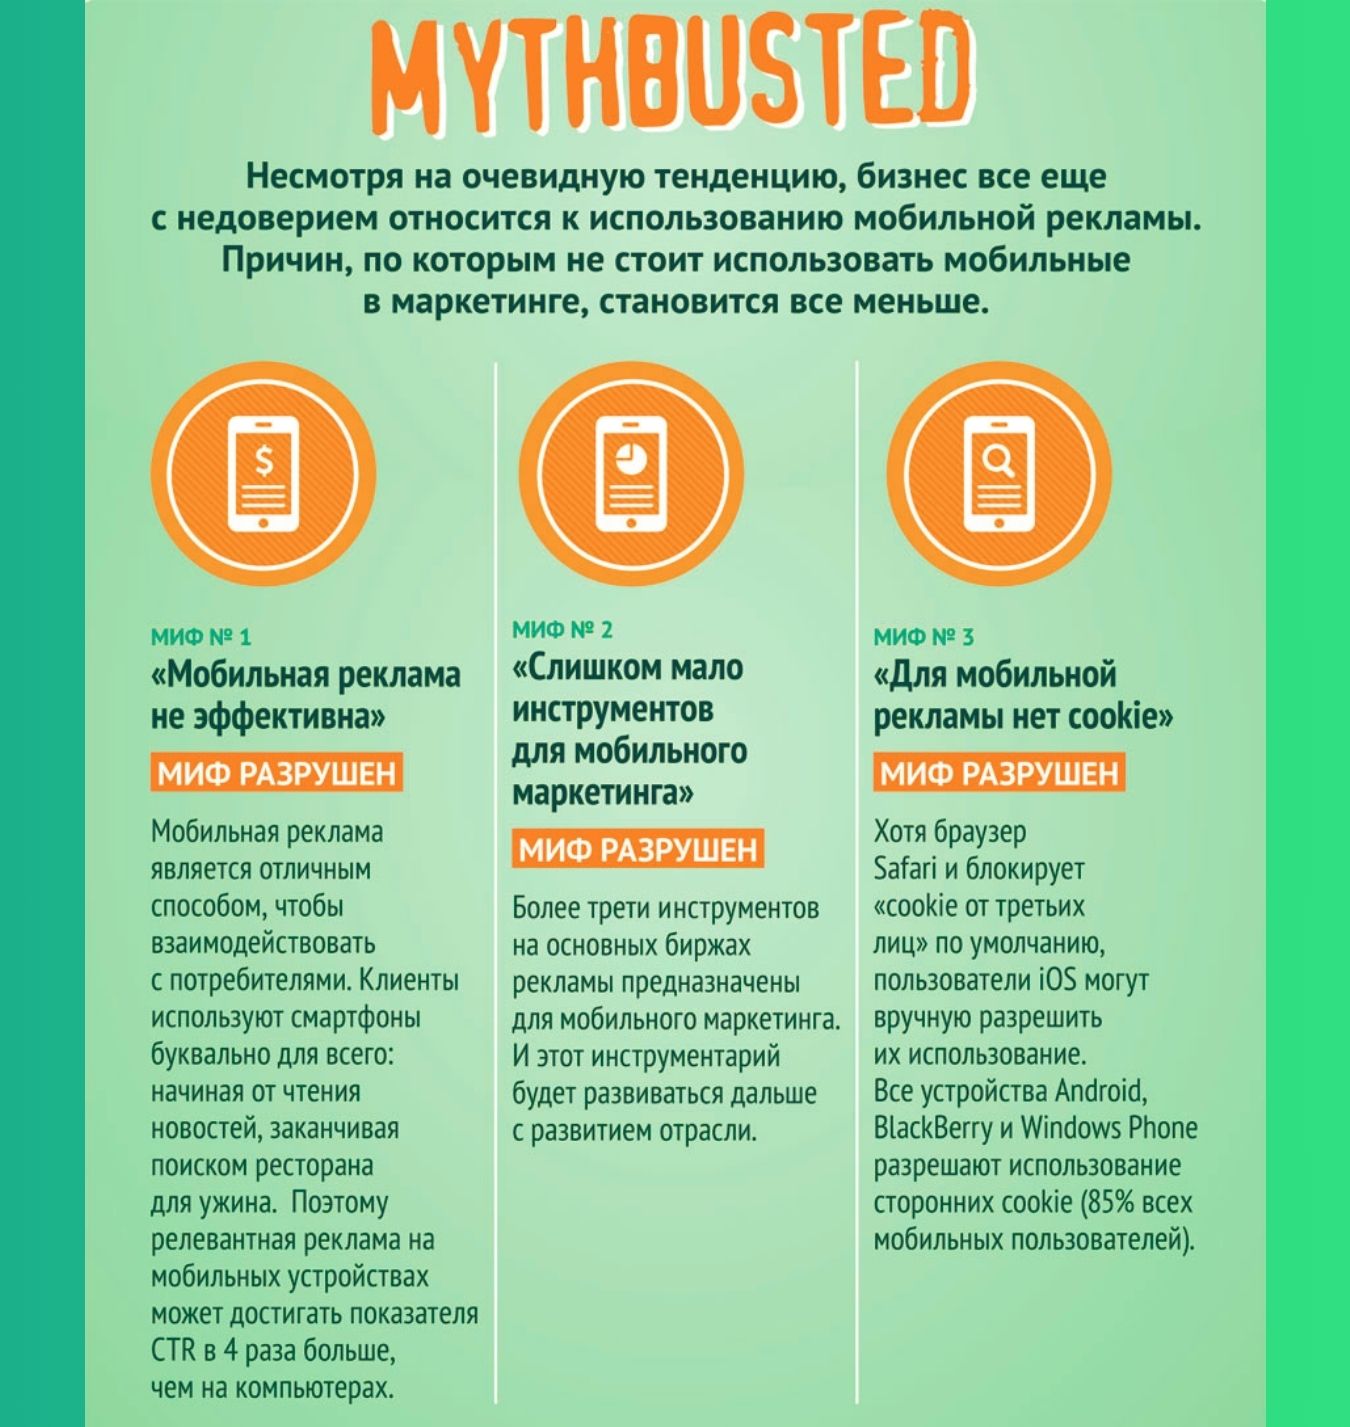 SMS marketing myths